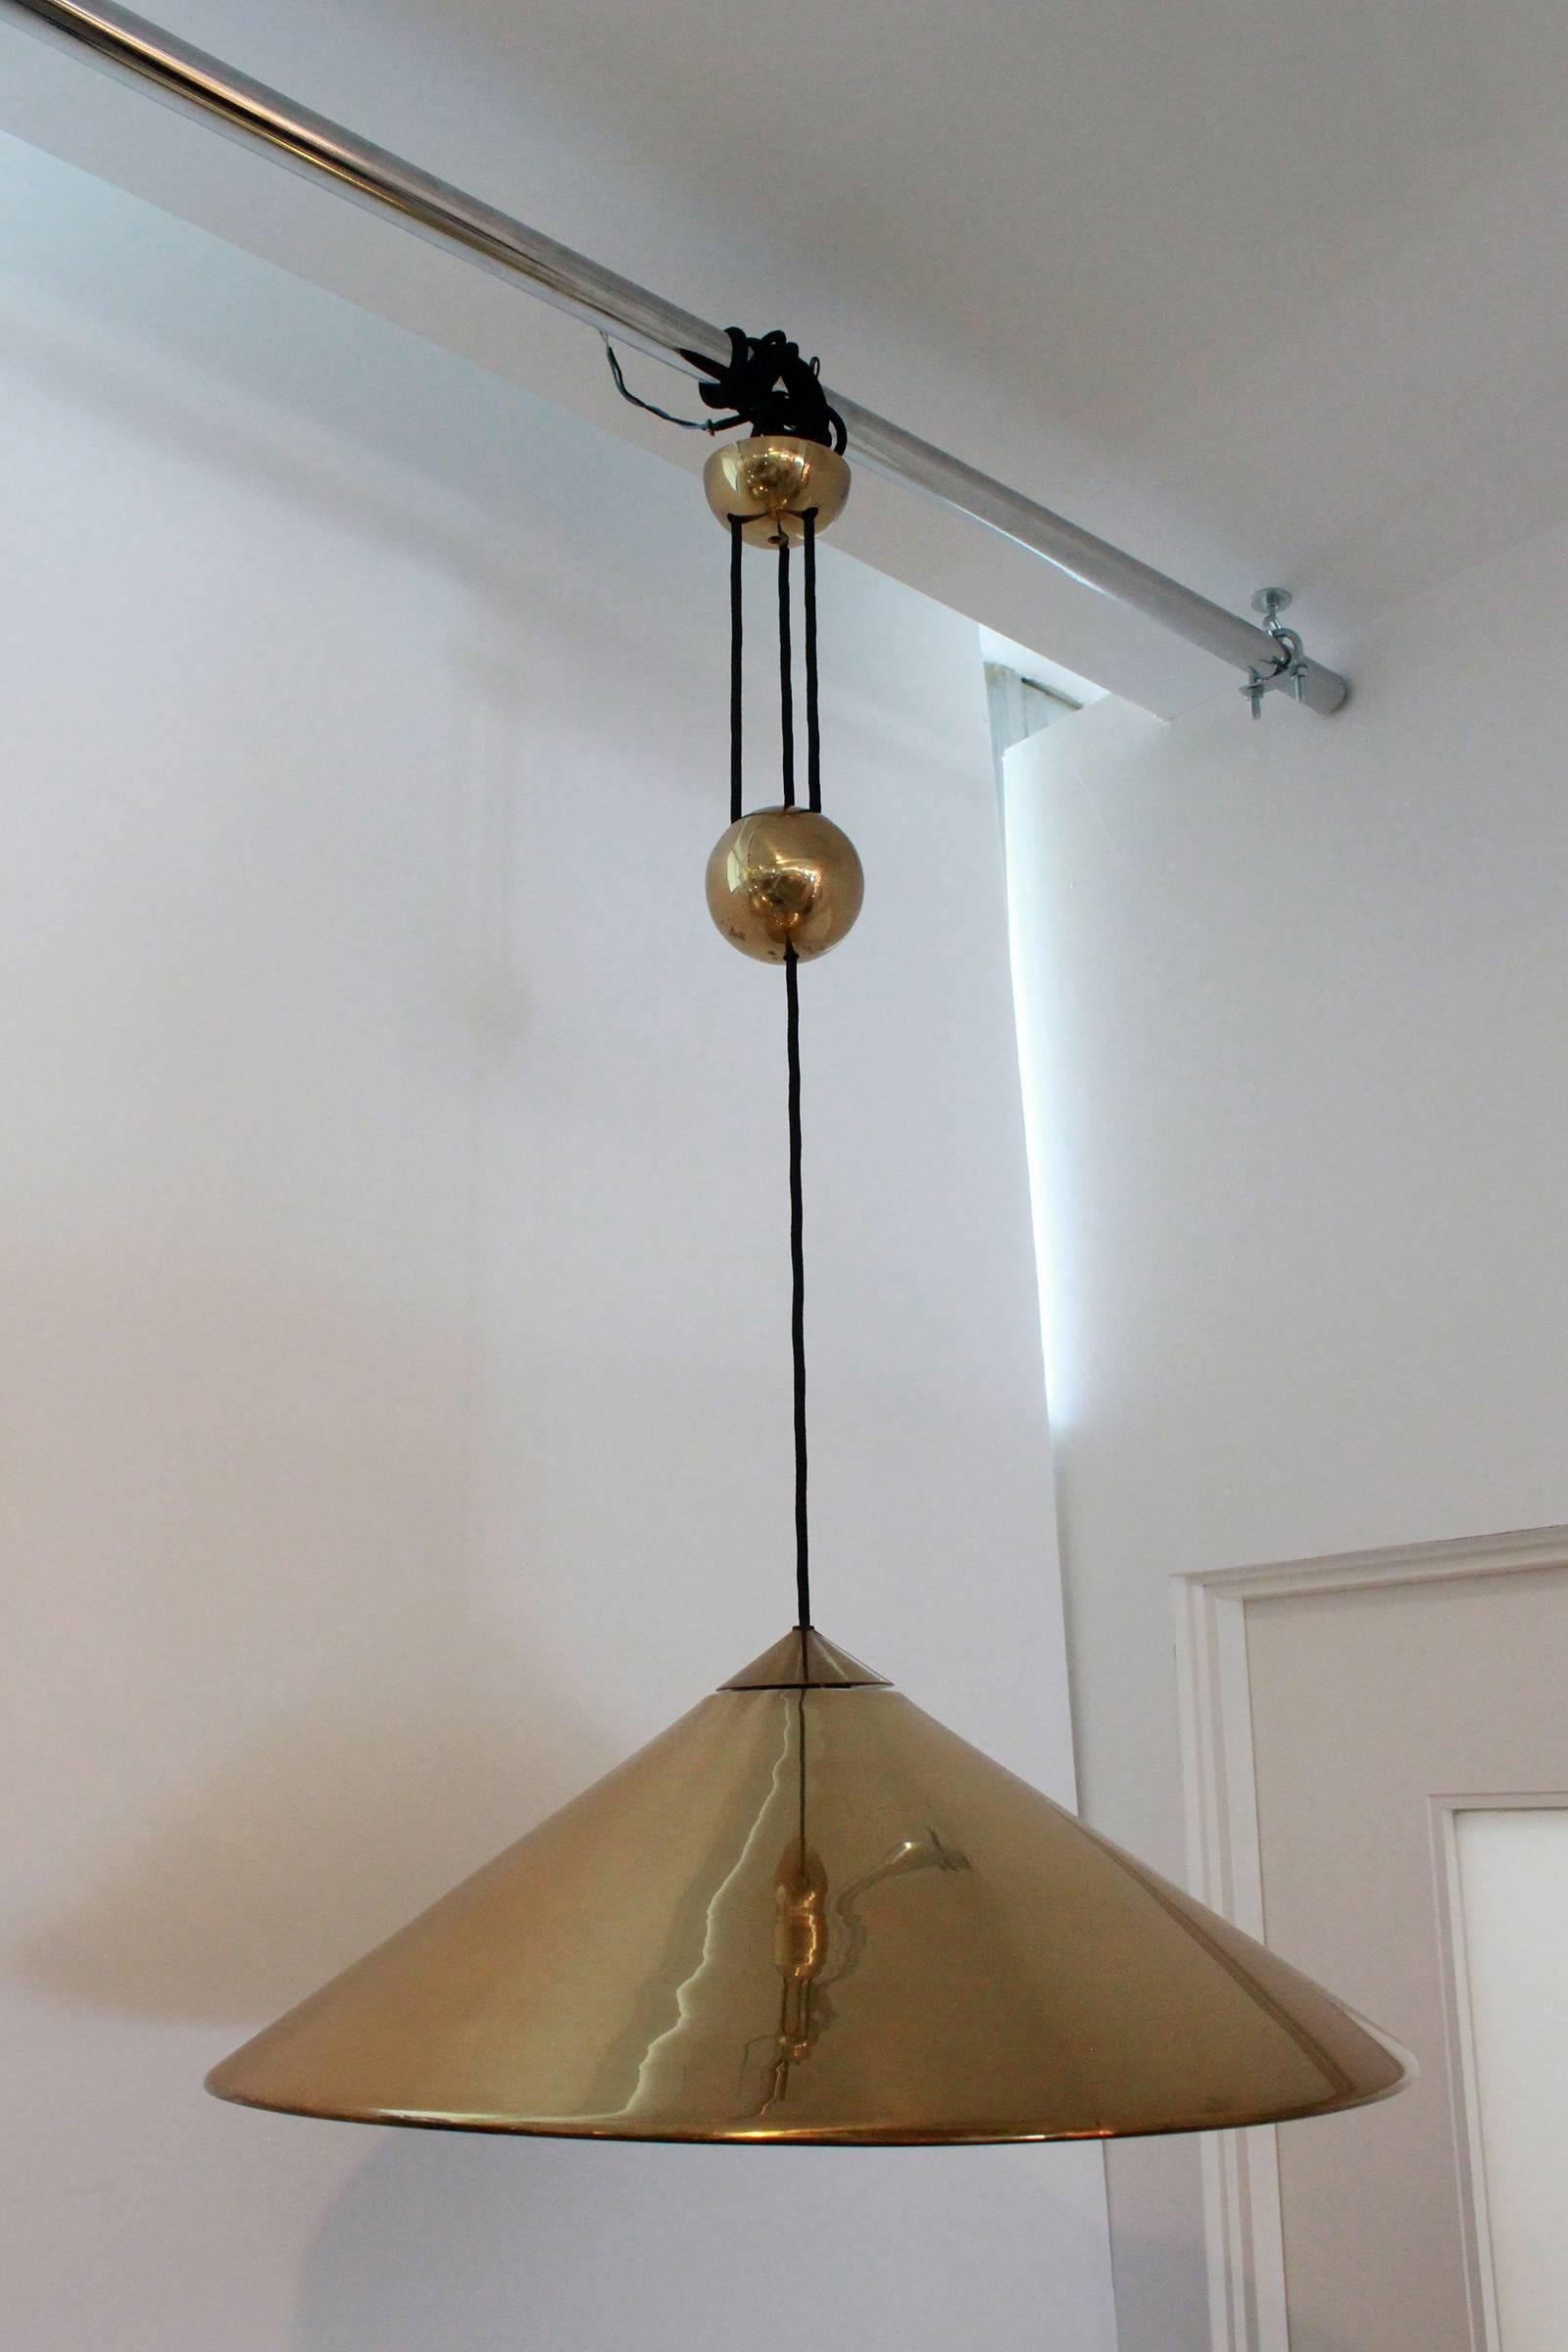 Brass Florian Schulz pendant with counterbalance brass ball. 
Newly rewired.